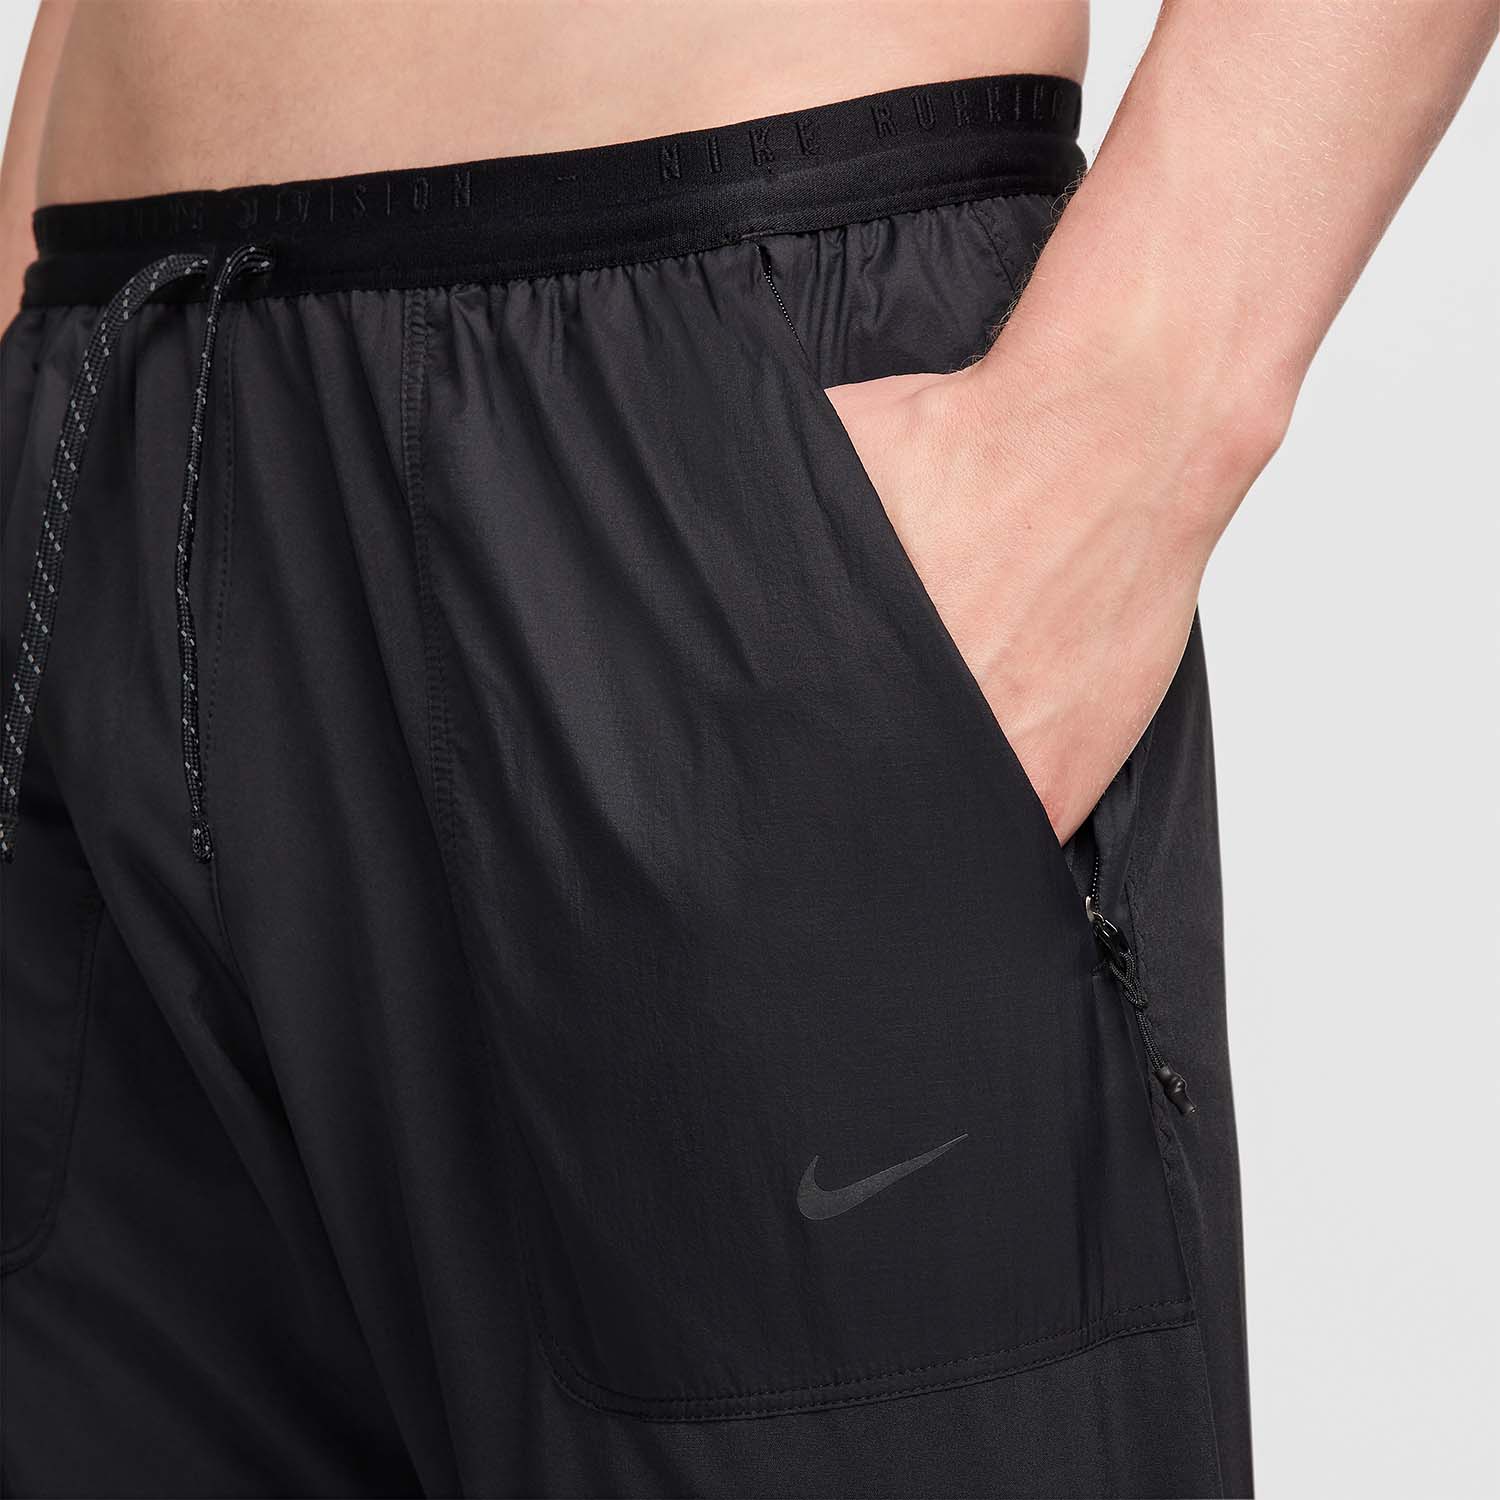 Nike Dri-FIT ADV Pants - Black/Blkref